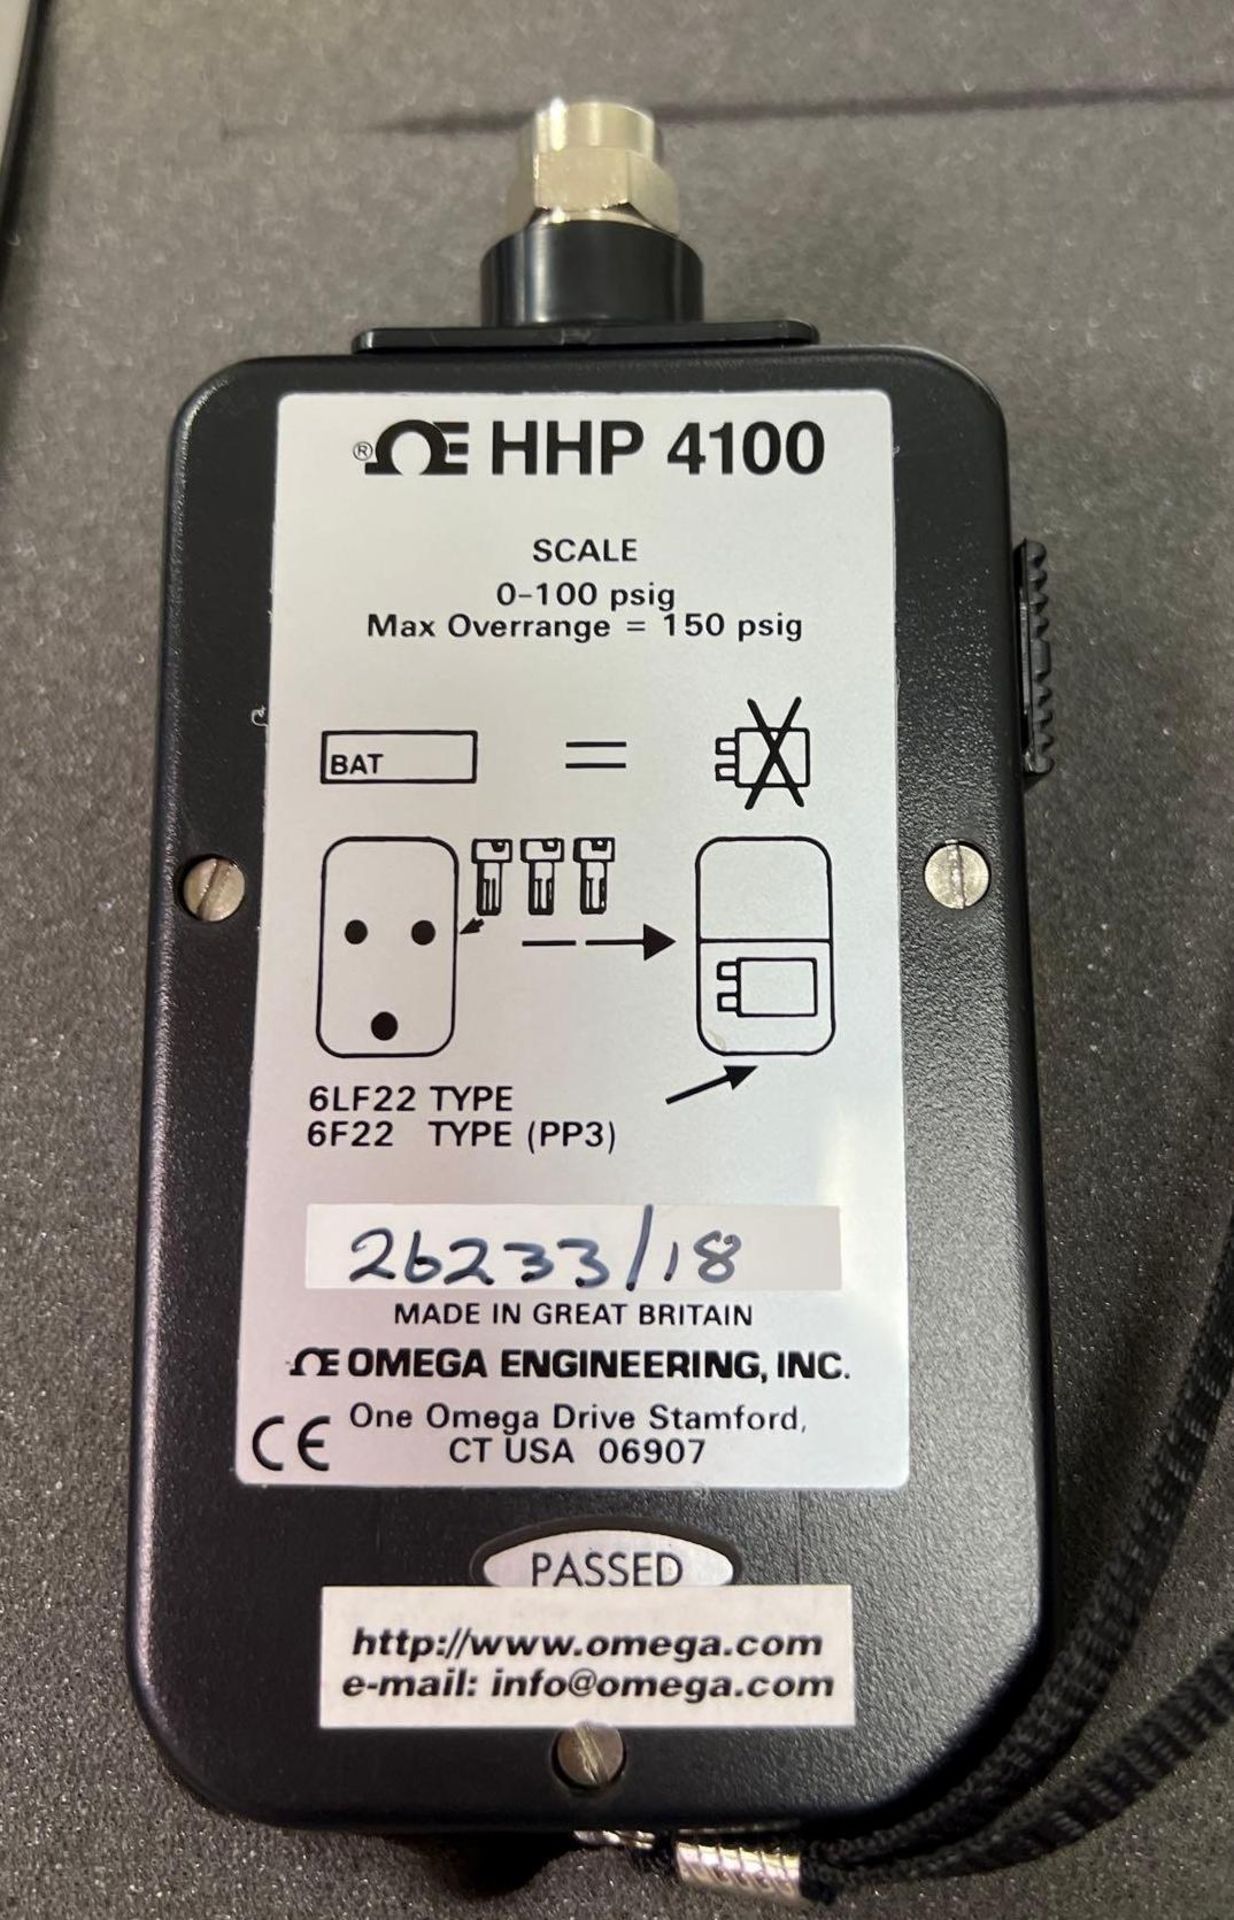 Omega Digital Handheld HHP 4100 Pressure Indicator - Image 2 of 4